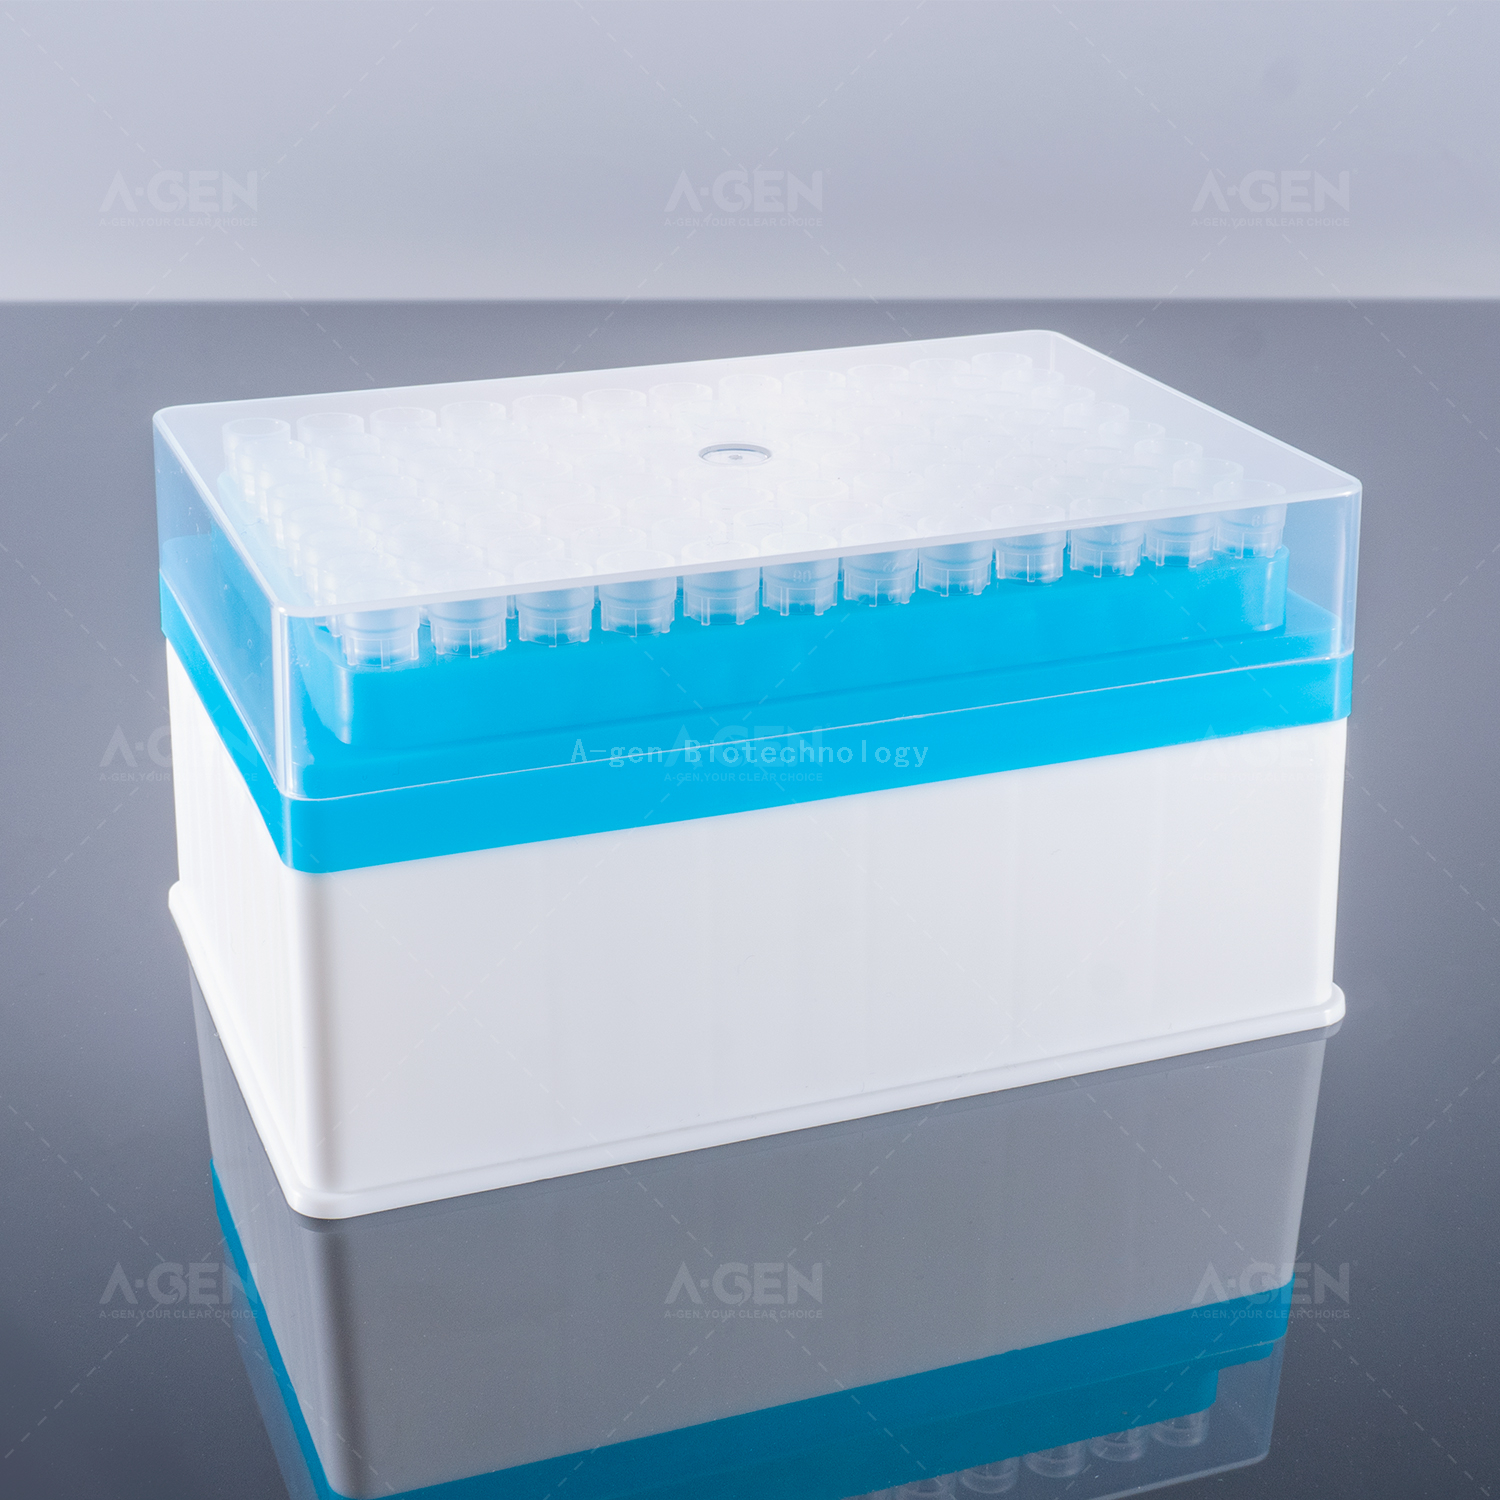 Tecan LiHa 50μL 透明 PP 移液器吸头（SBS 架式，灭菌），用于液体转移，带过滤器 TTF-50-HSL 低保留